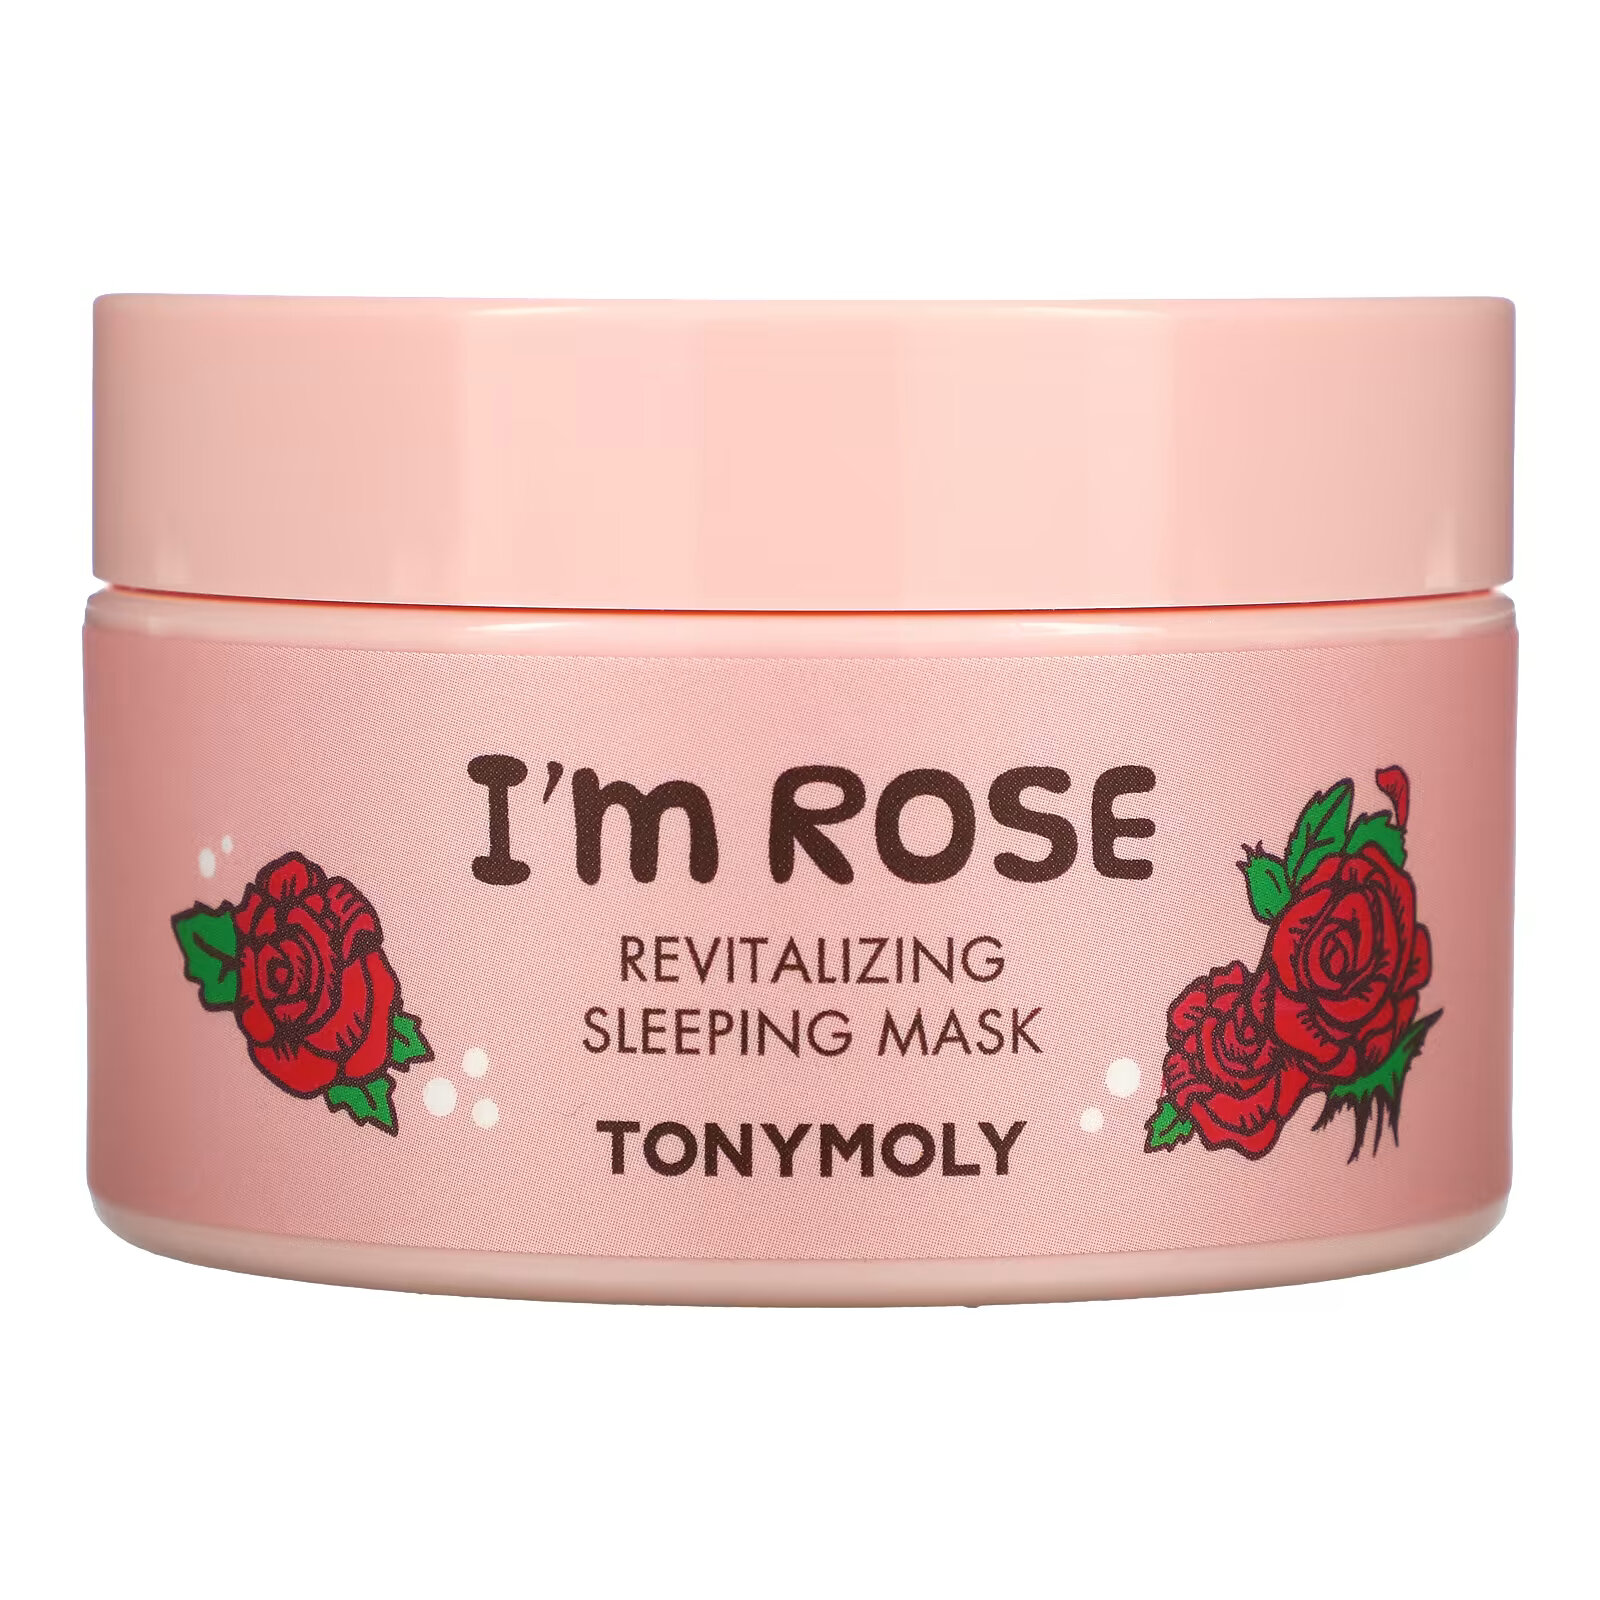 Tony Moly, I'm Rose, Восстанавливающая маска для сна, 3,52 унции (100 г) tony moly i m rose восстанавливающая маска для сна 3 52 унции 100 г